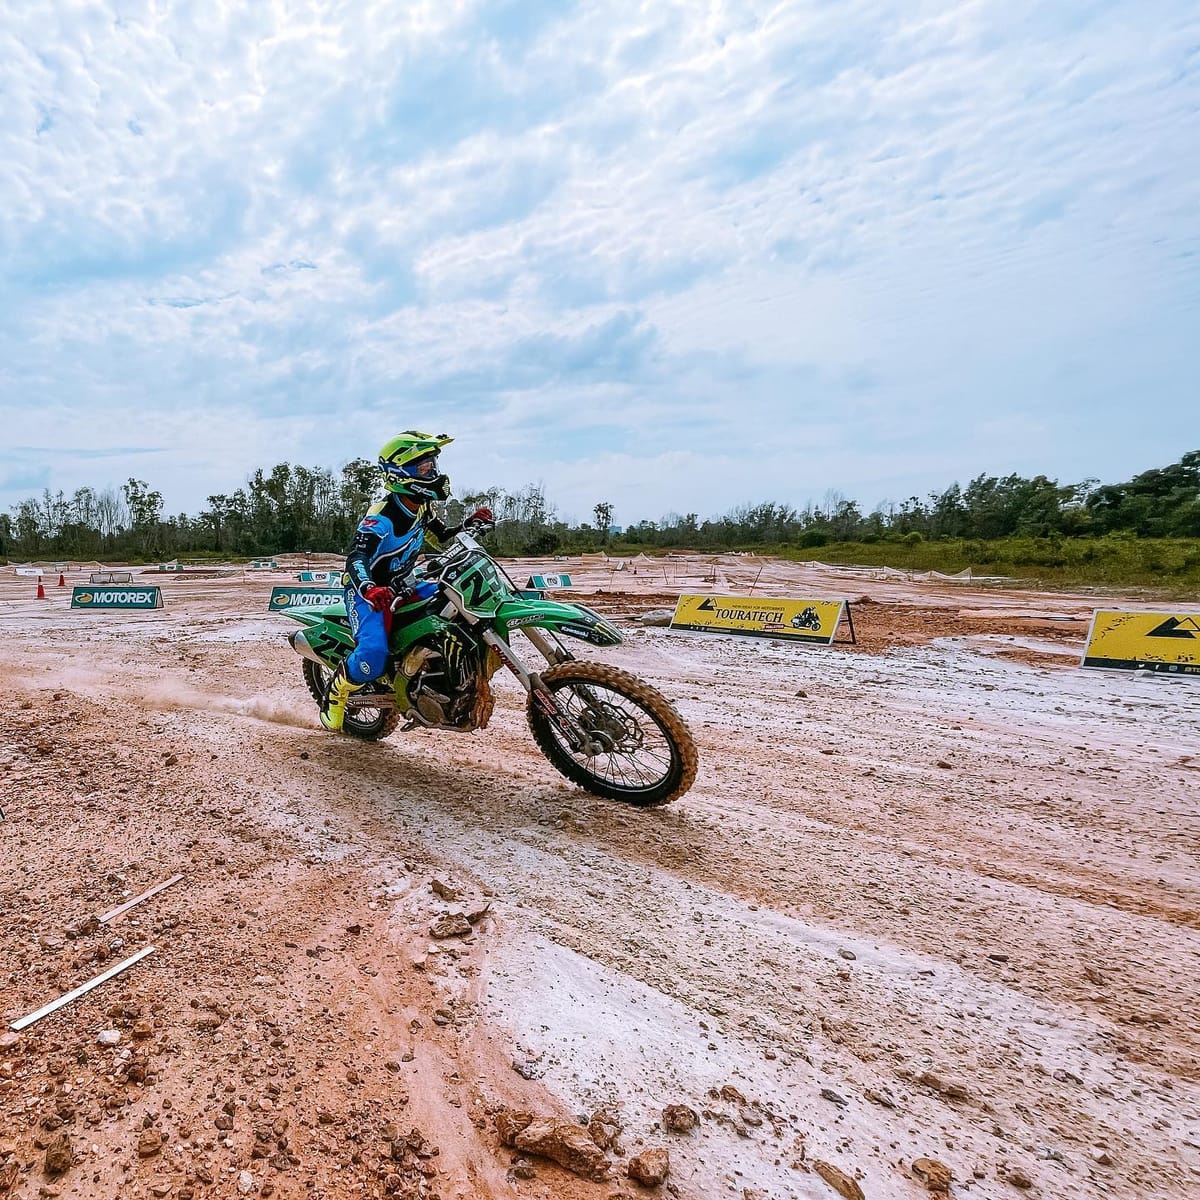 off-road-motorcross-dirt-bike-riding-lesson-by-most-fun-gym-malaysia-pelago0.jpg